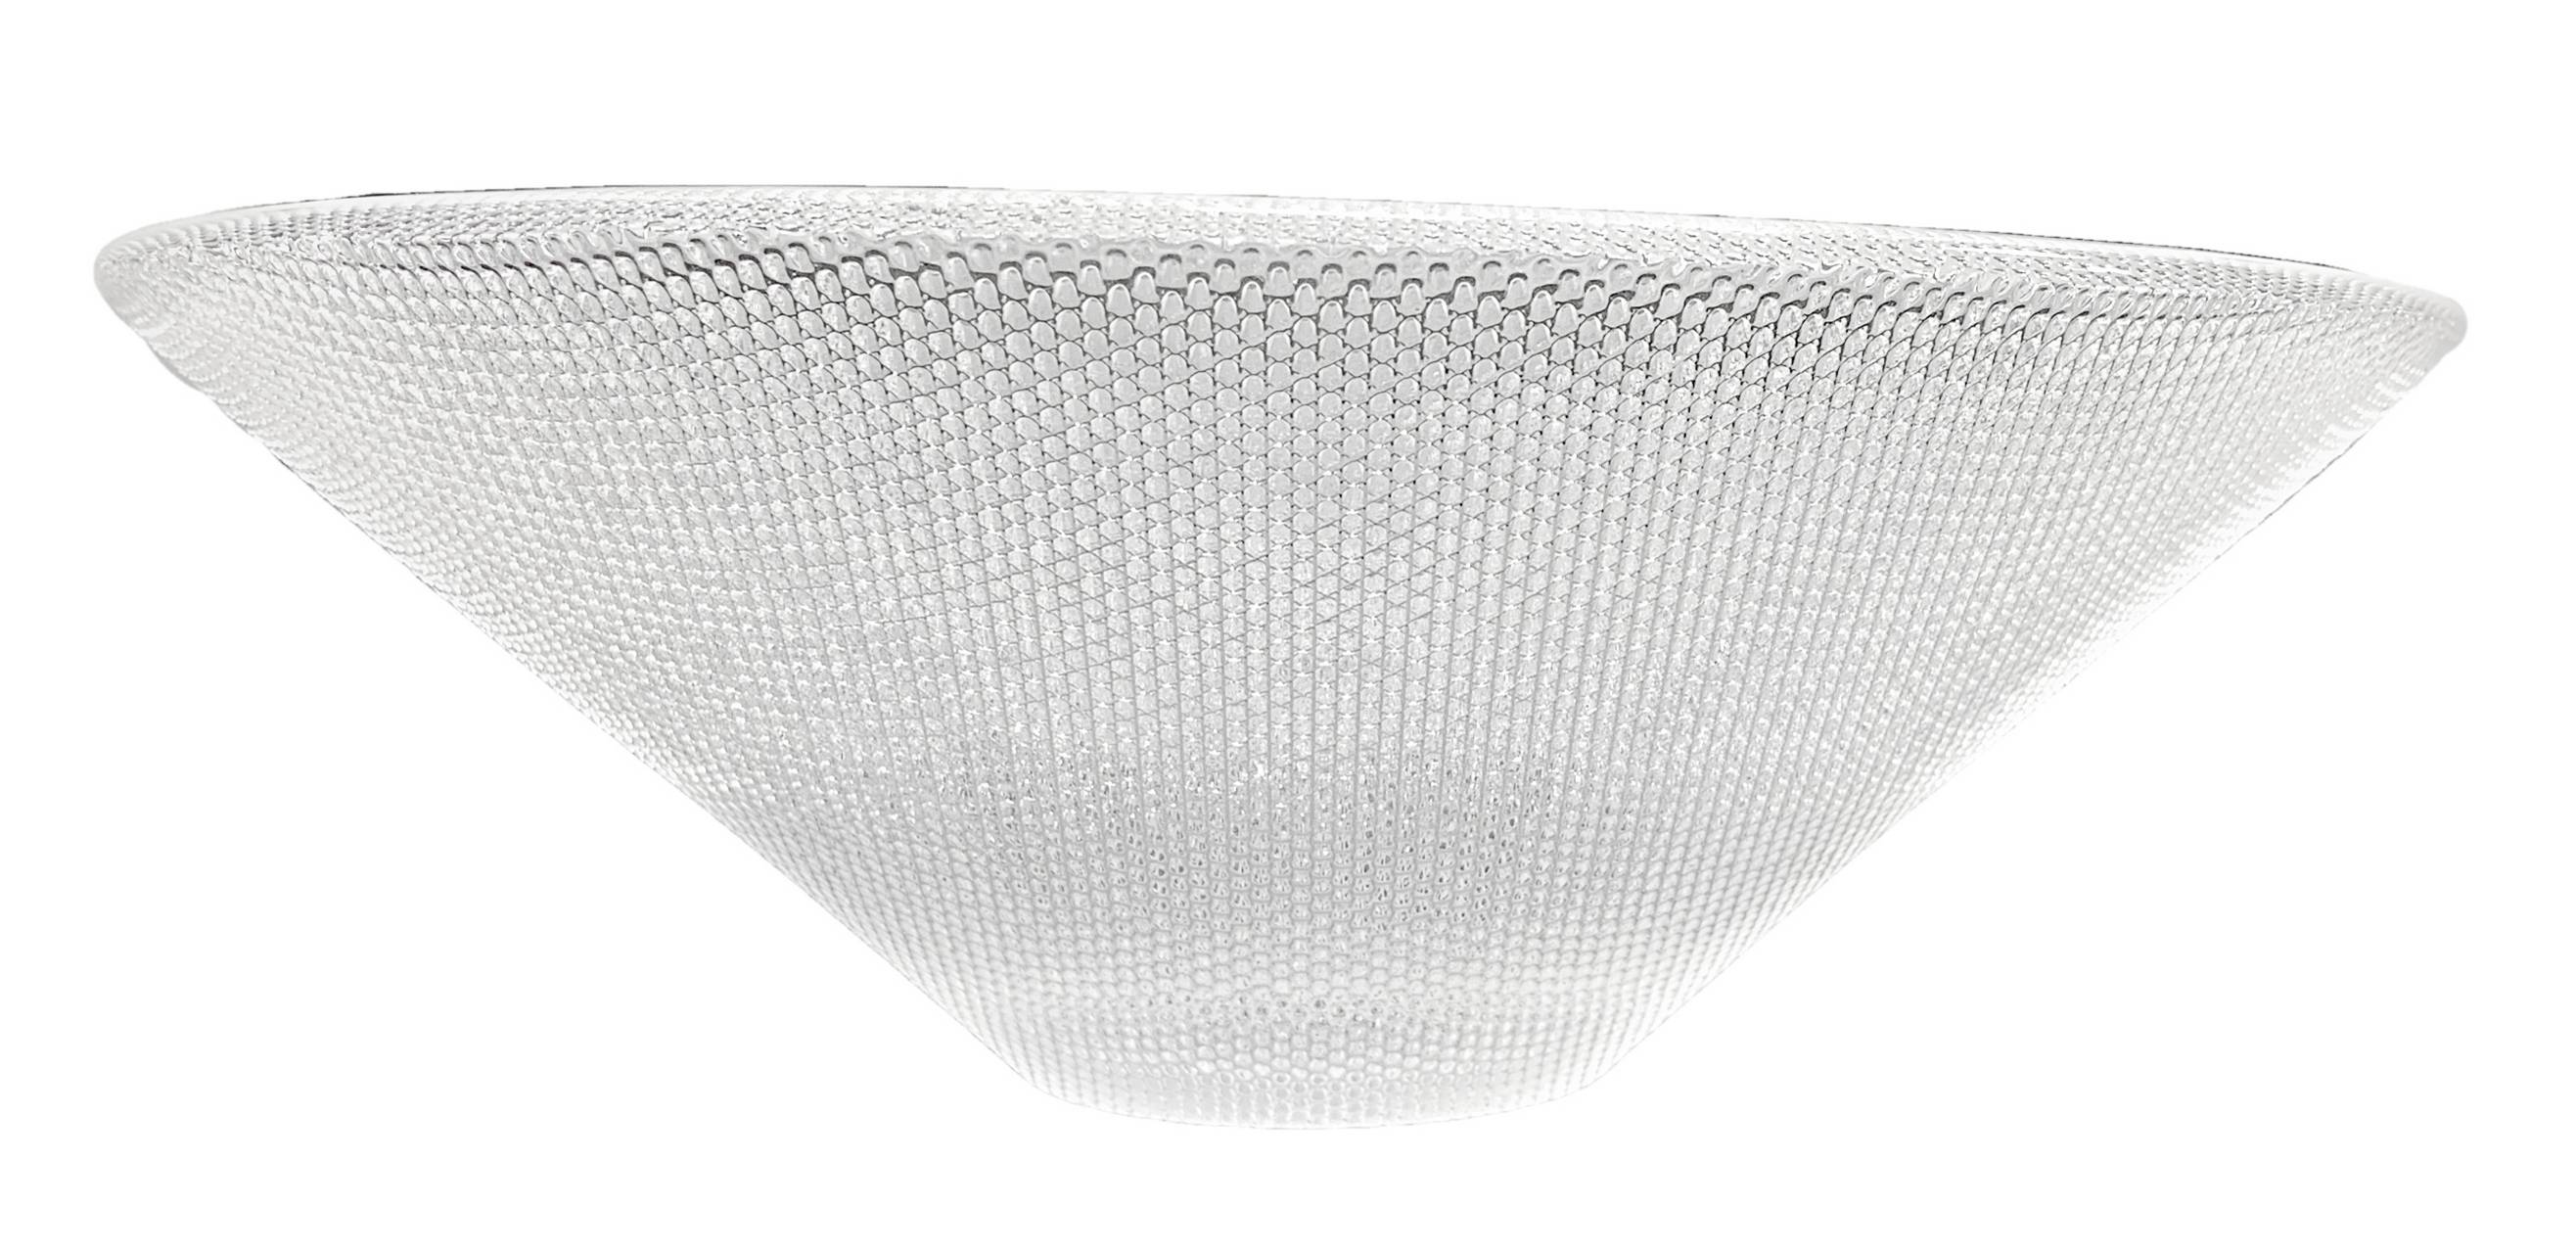 Centerpiece of frustoconical shape in diamond printed transparent glass. H 9 cm diameter 26.5 cm - Image 3 of 4